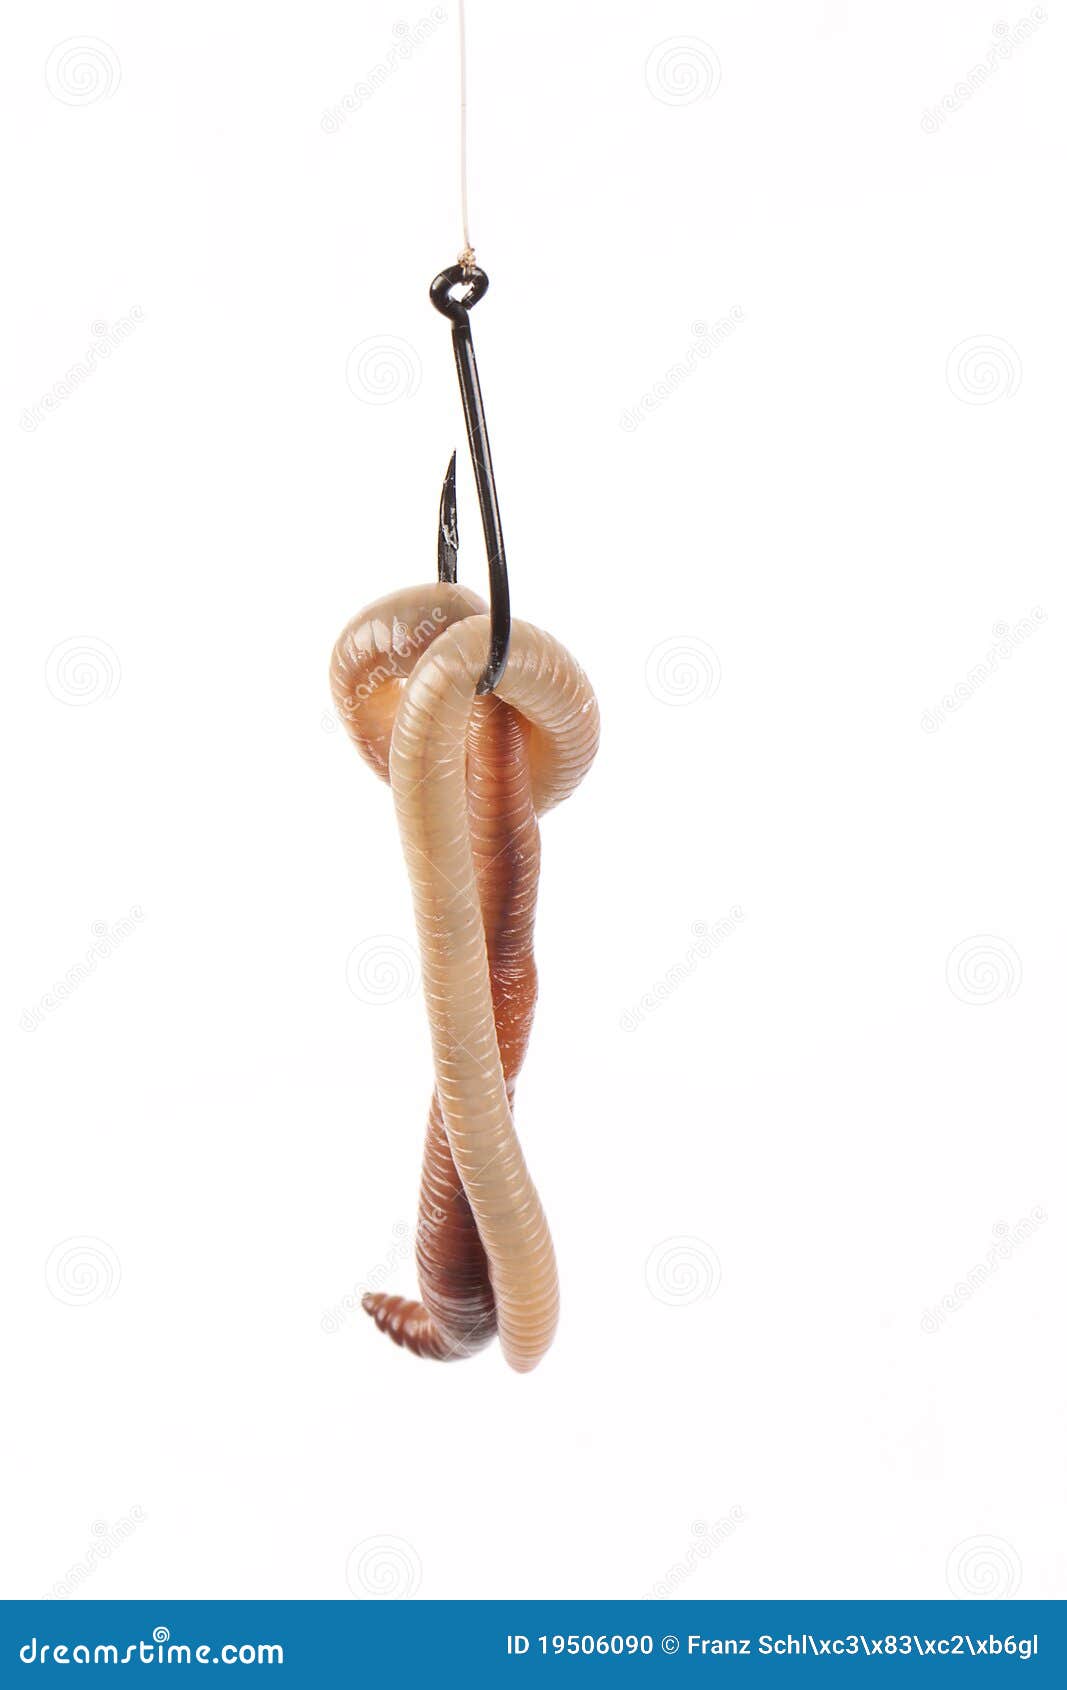 Earthworm on Fishing Hook stock photo. Image of insect - 19506090